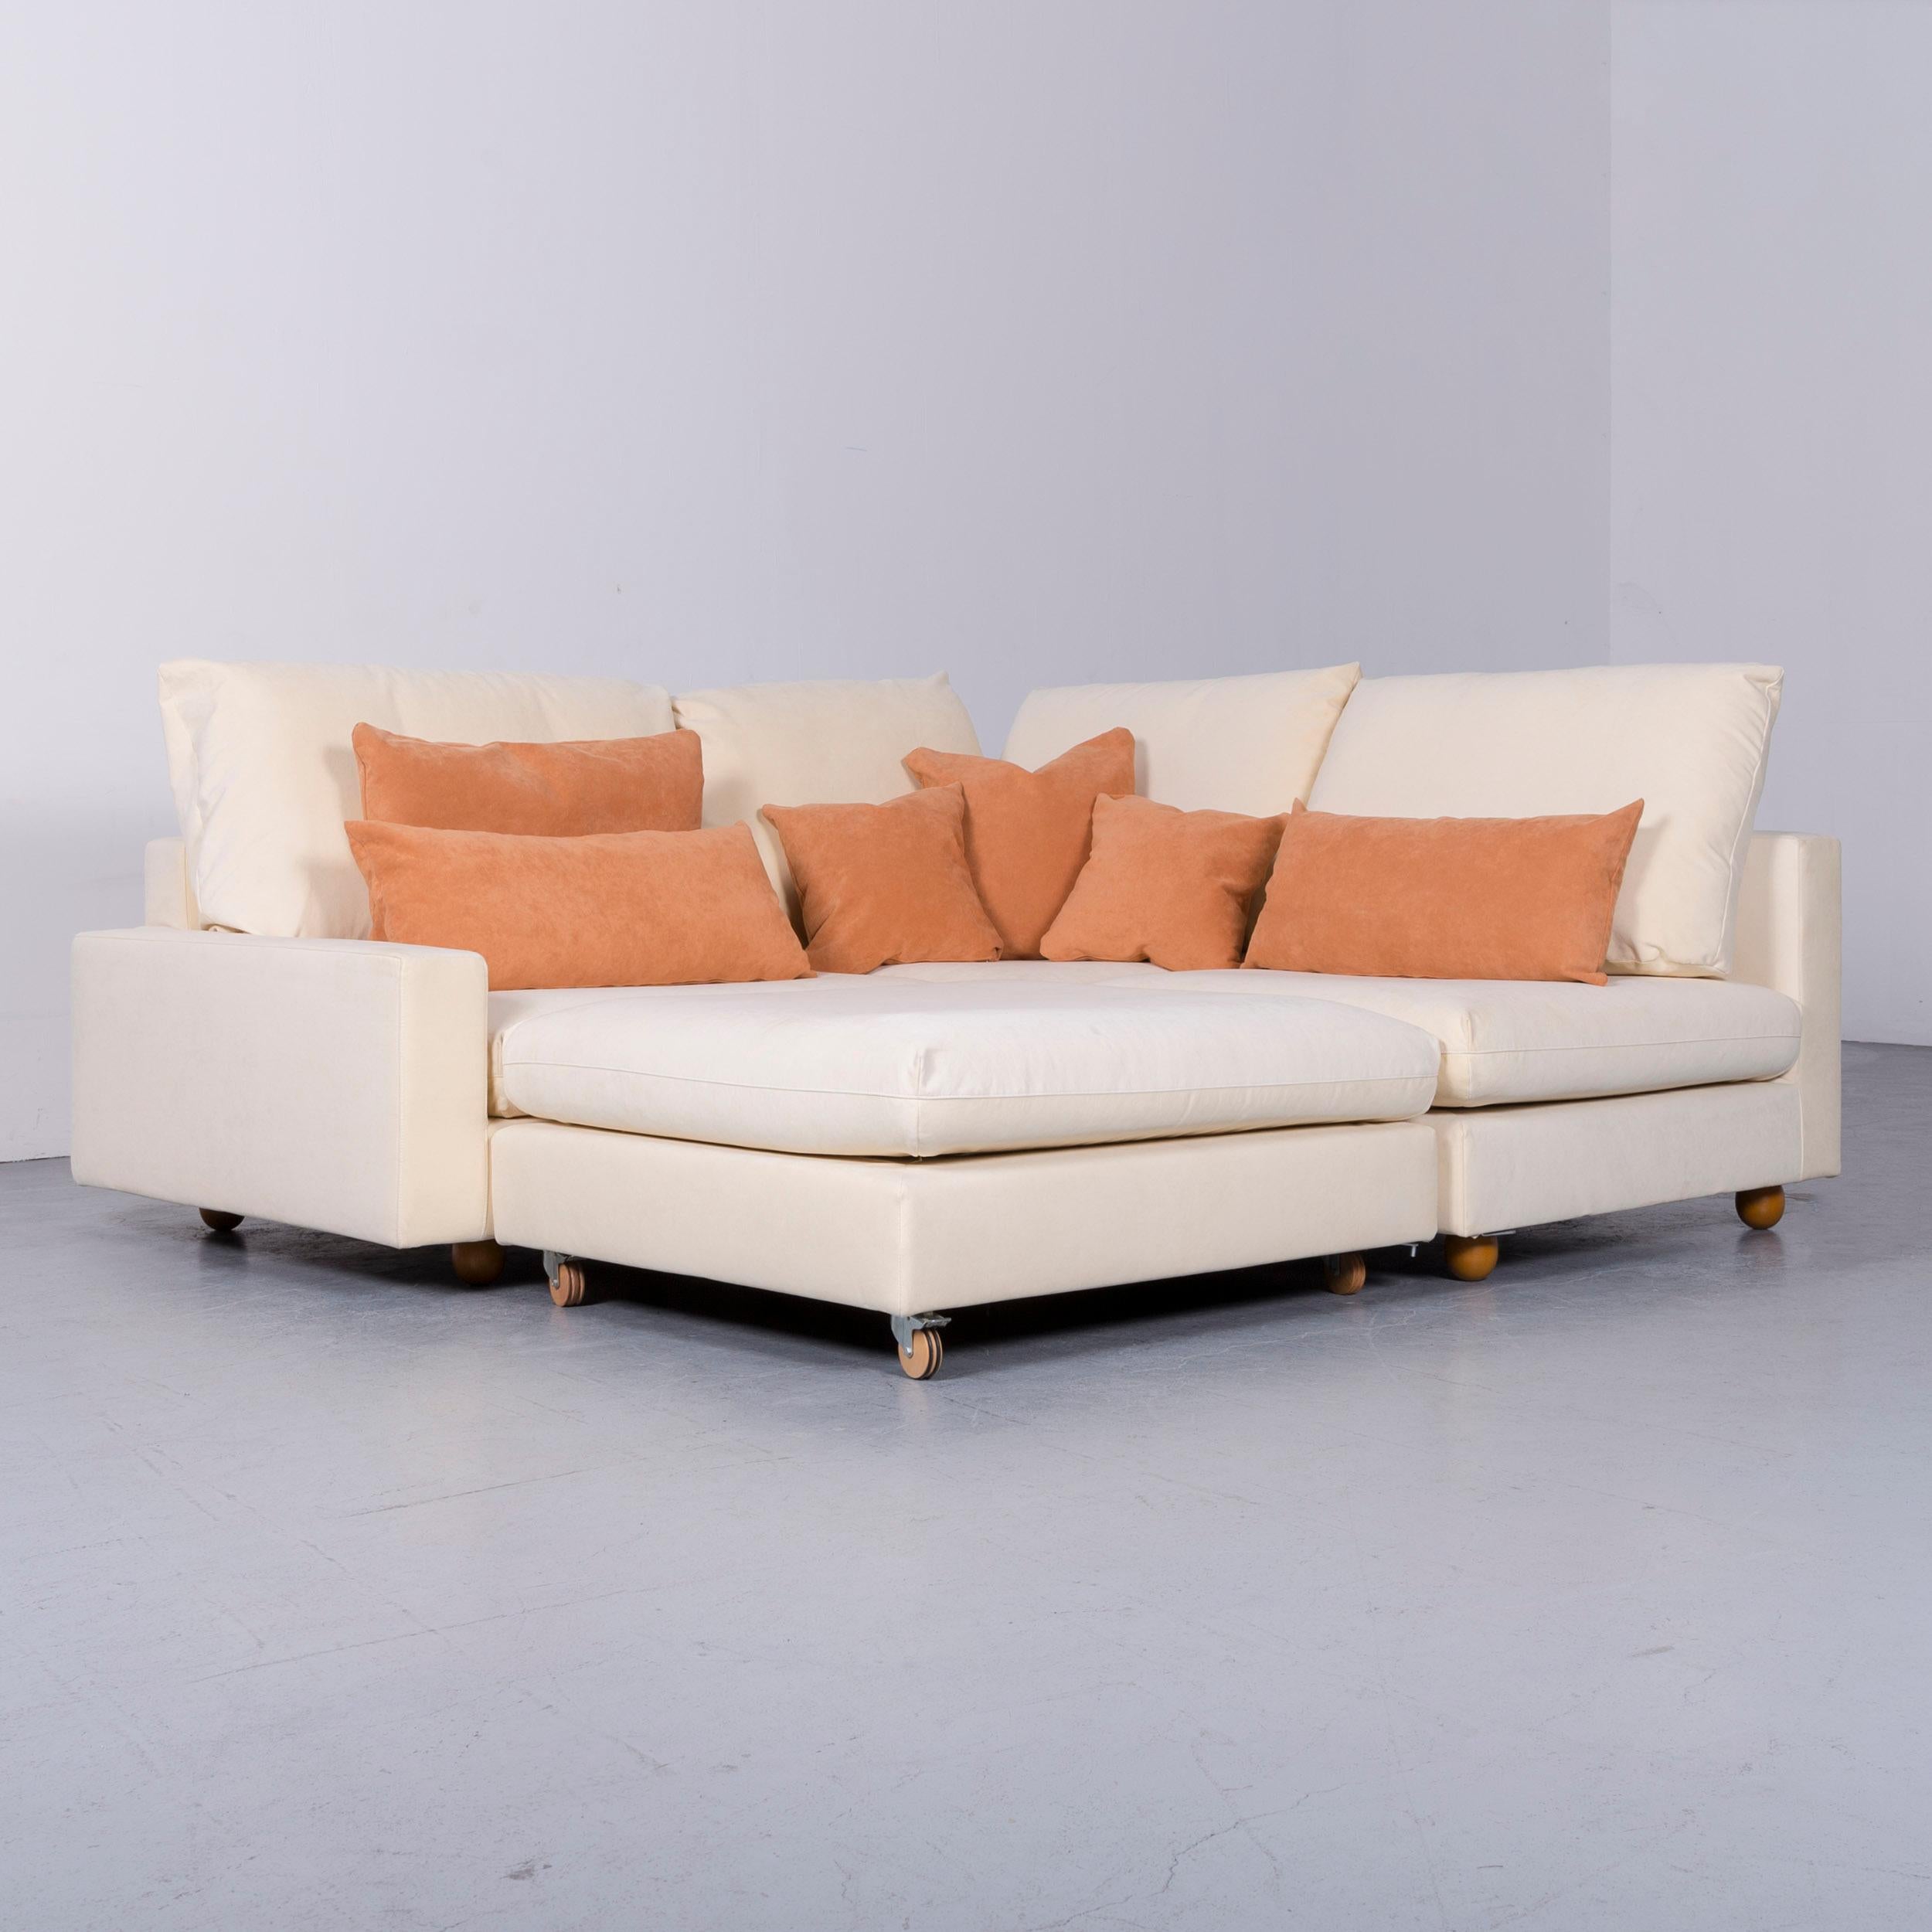 We bring to you a Pro Seda designer verlours fabric sofa beige corner-sofa couch modern.